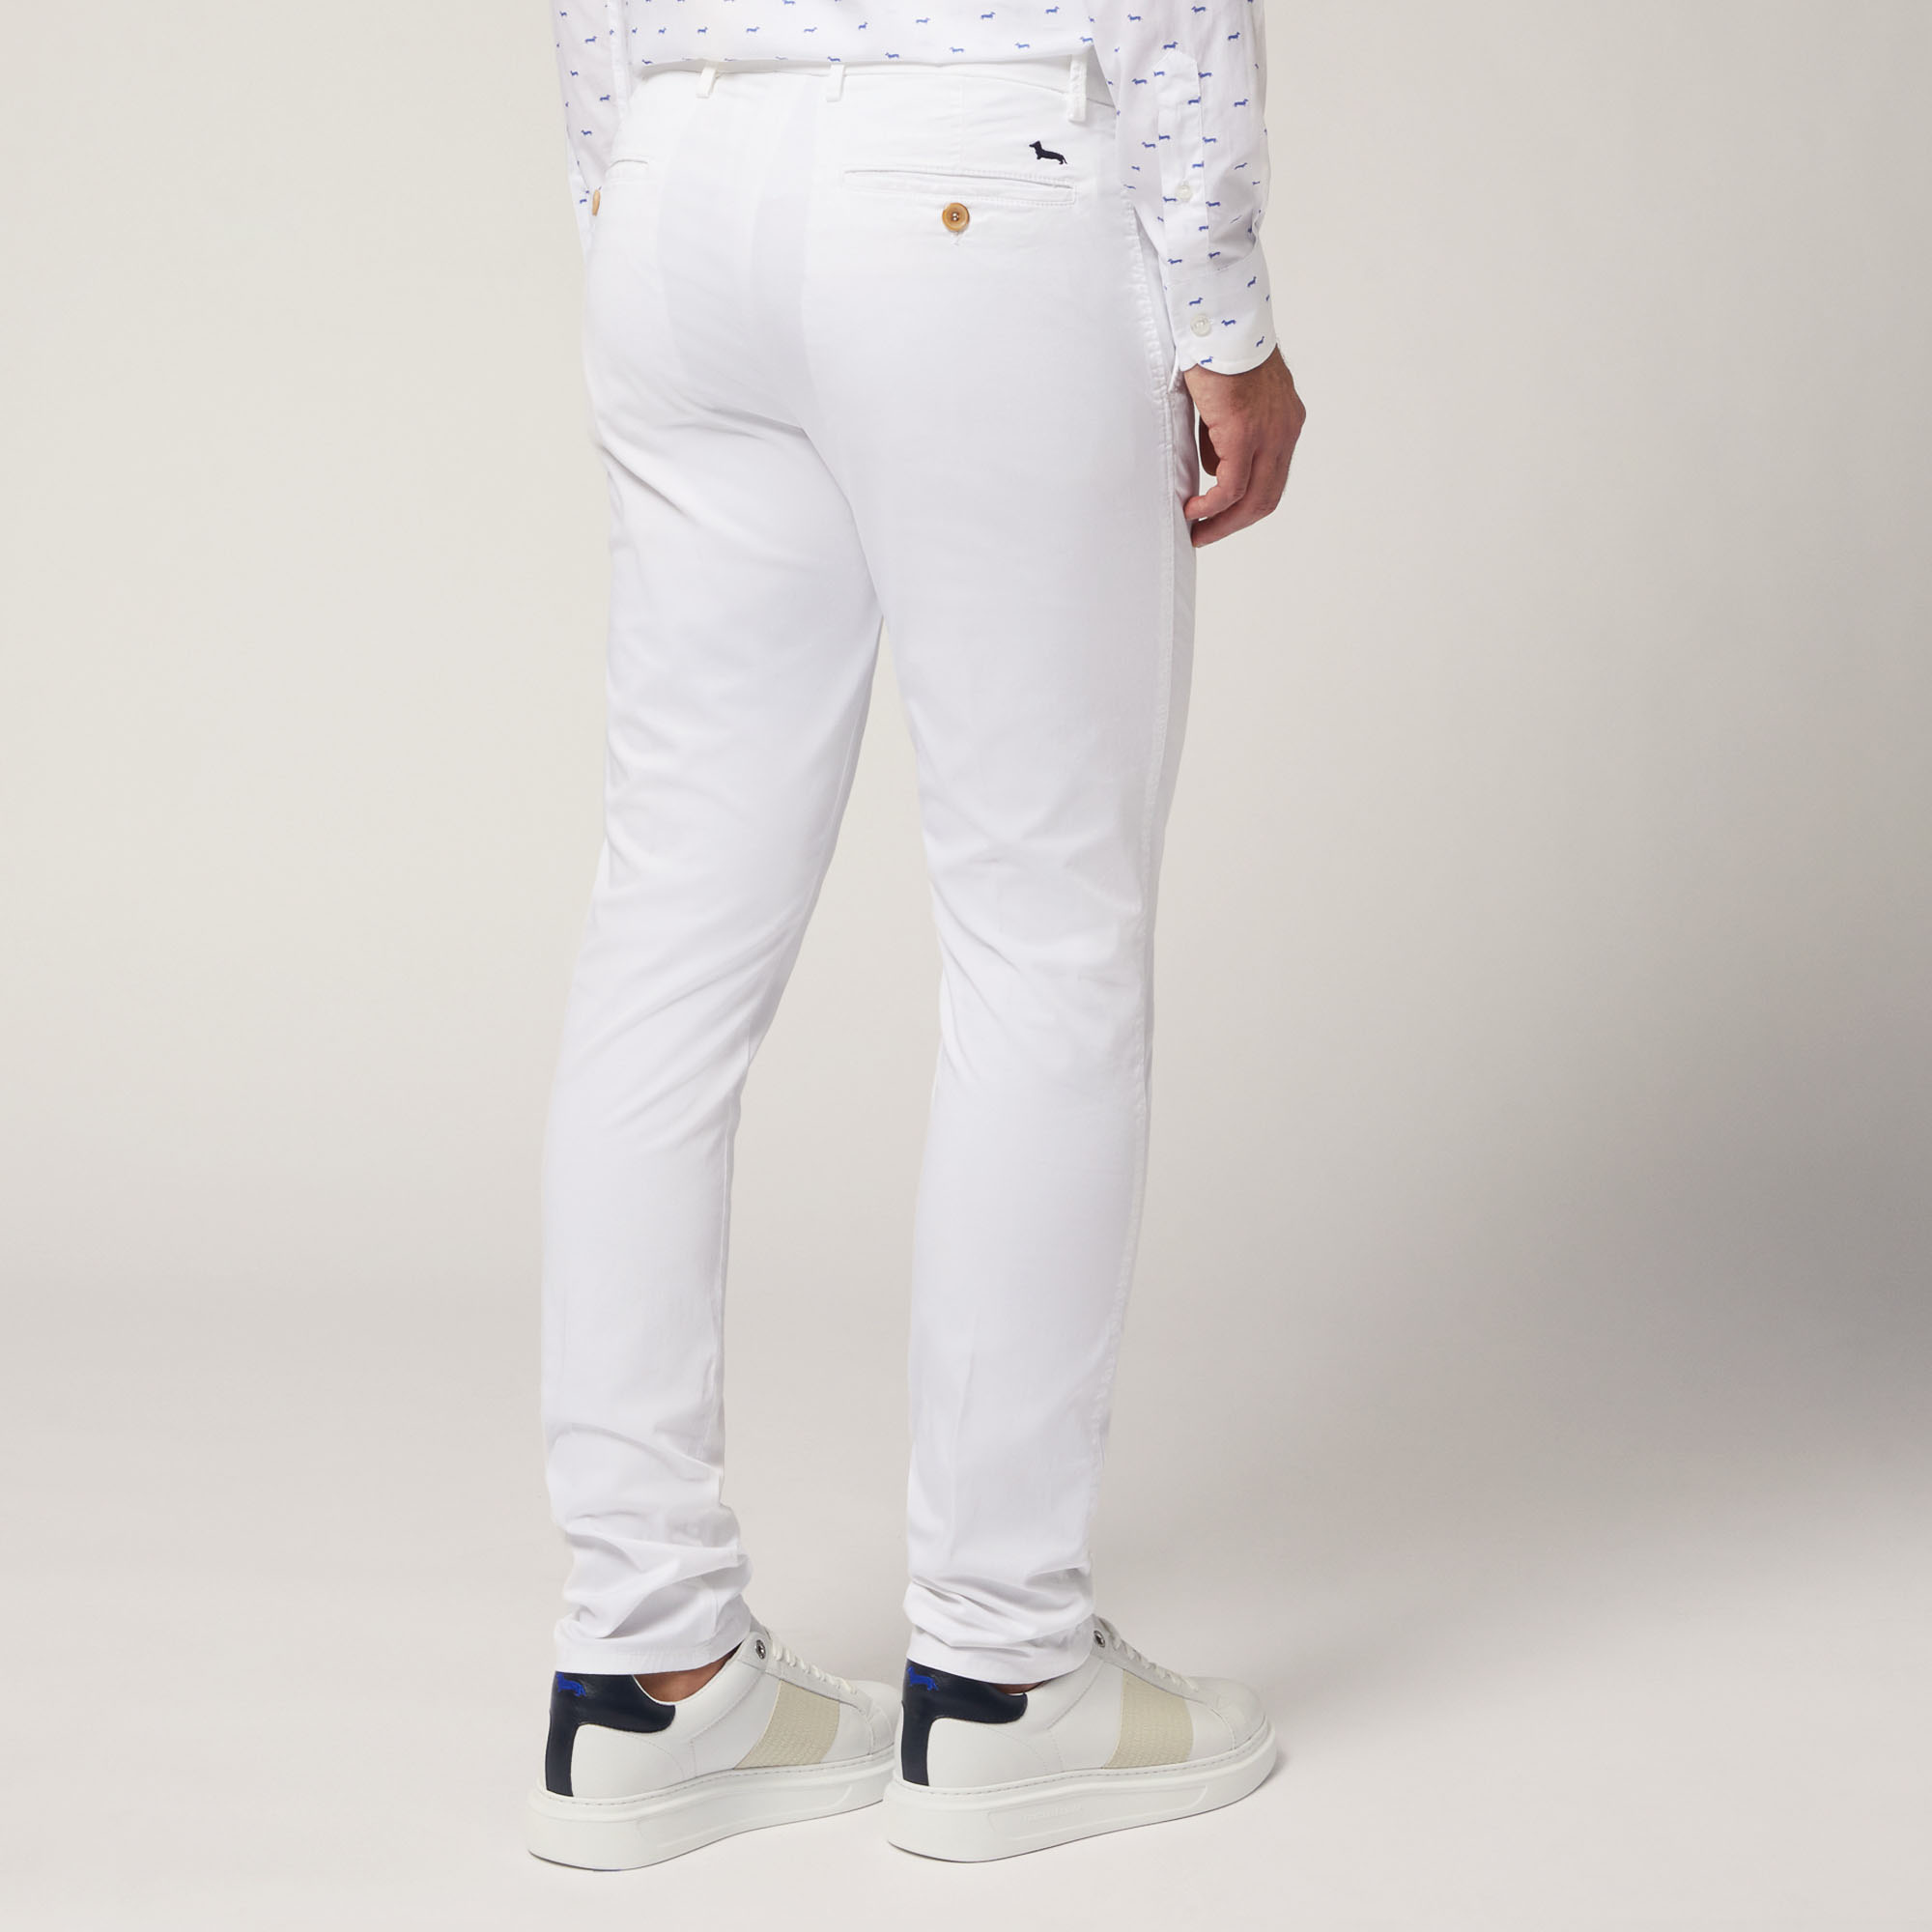 Pantaloni Chino Narrow Fit, Bianco, large image number 1